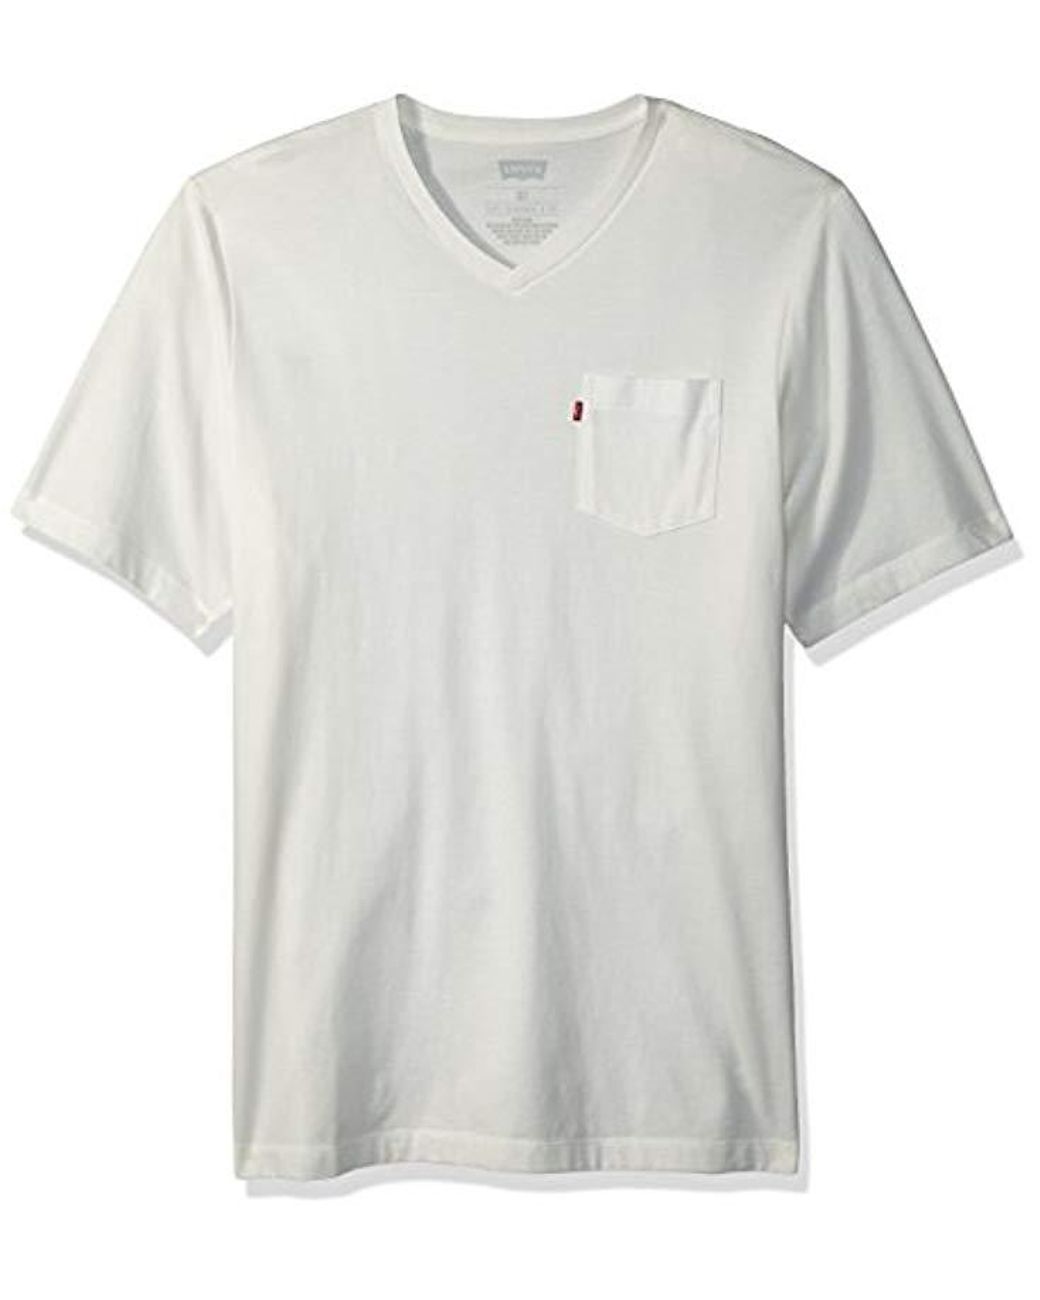 Levi's Harper Pocket V-neck T-shirt in White for Men - Save 7% - Lyst